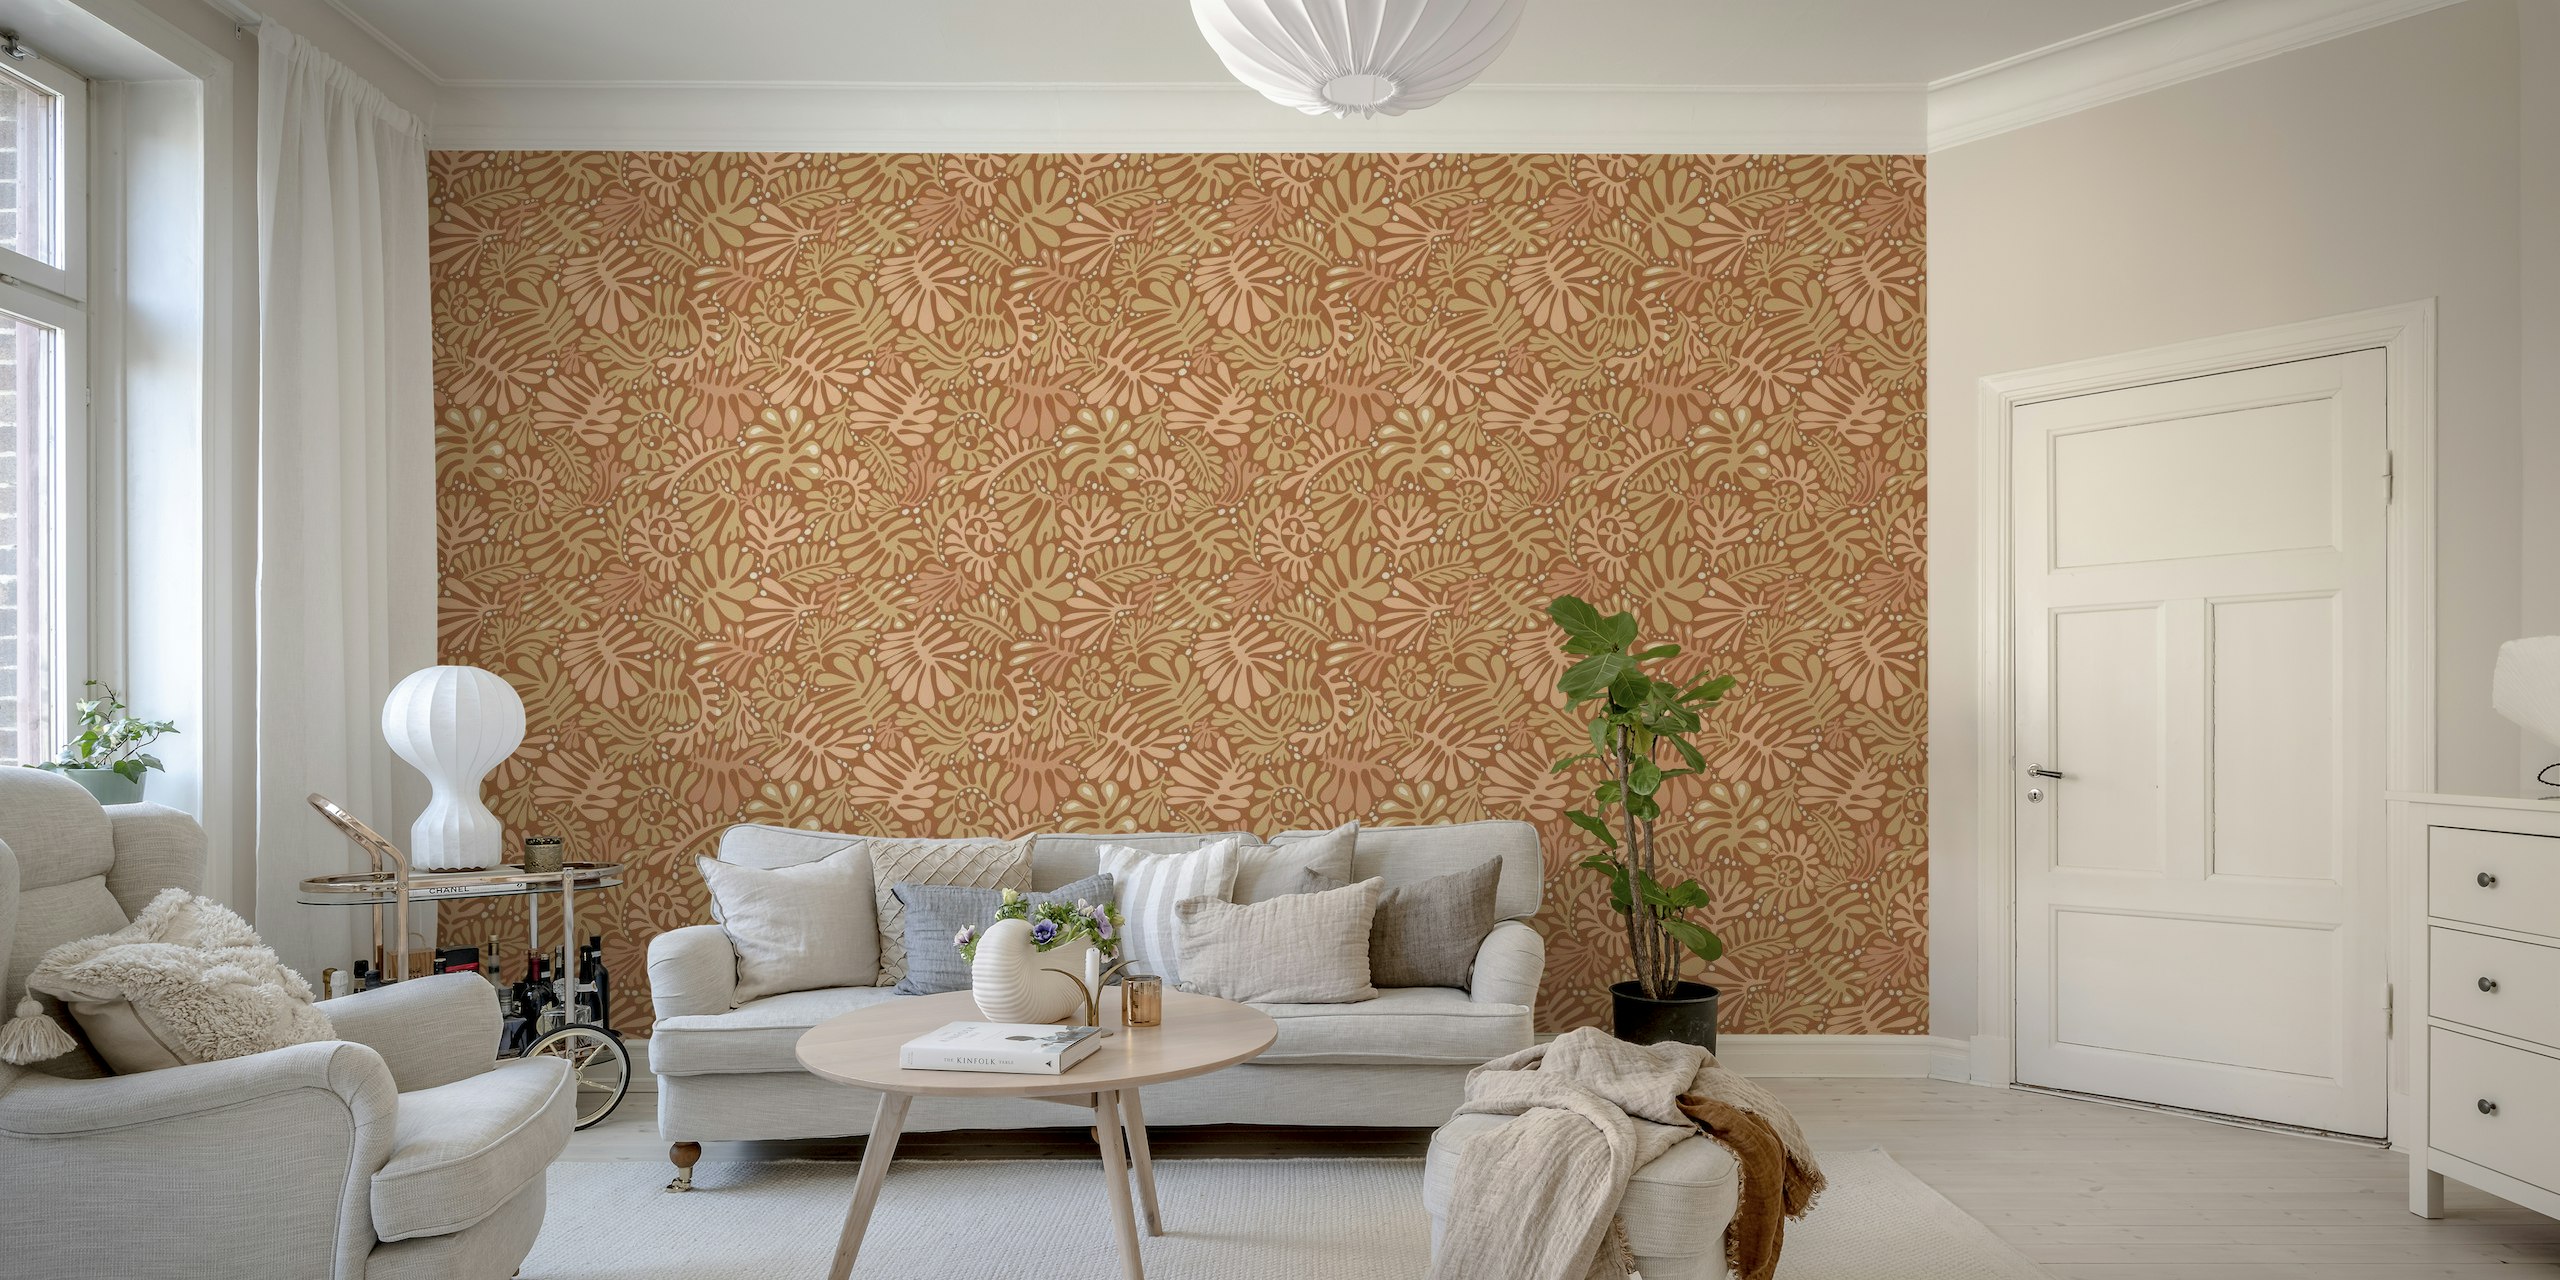 Zidna slika s uzorkom hrđavog lišća terakote, suptilni zemljani tonovi za prirodni dekor